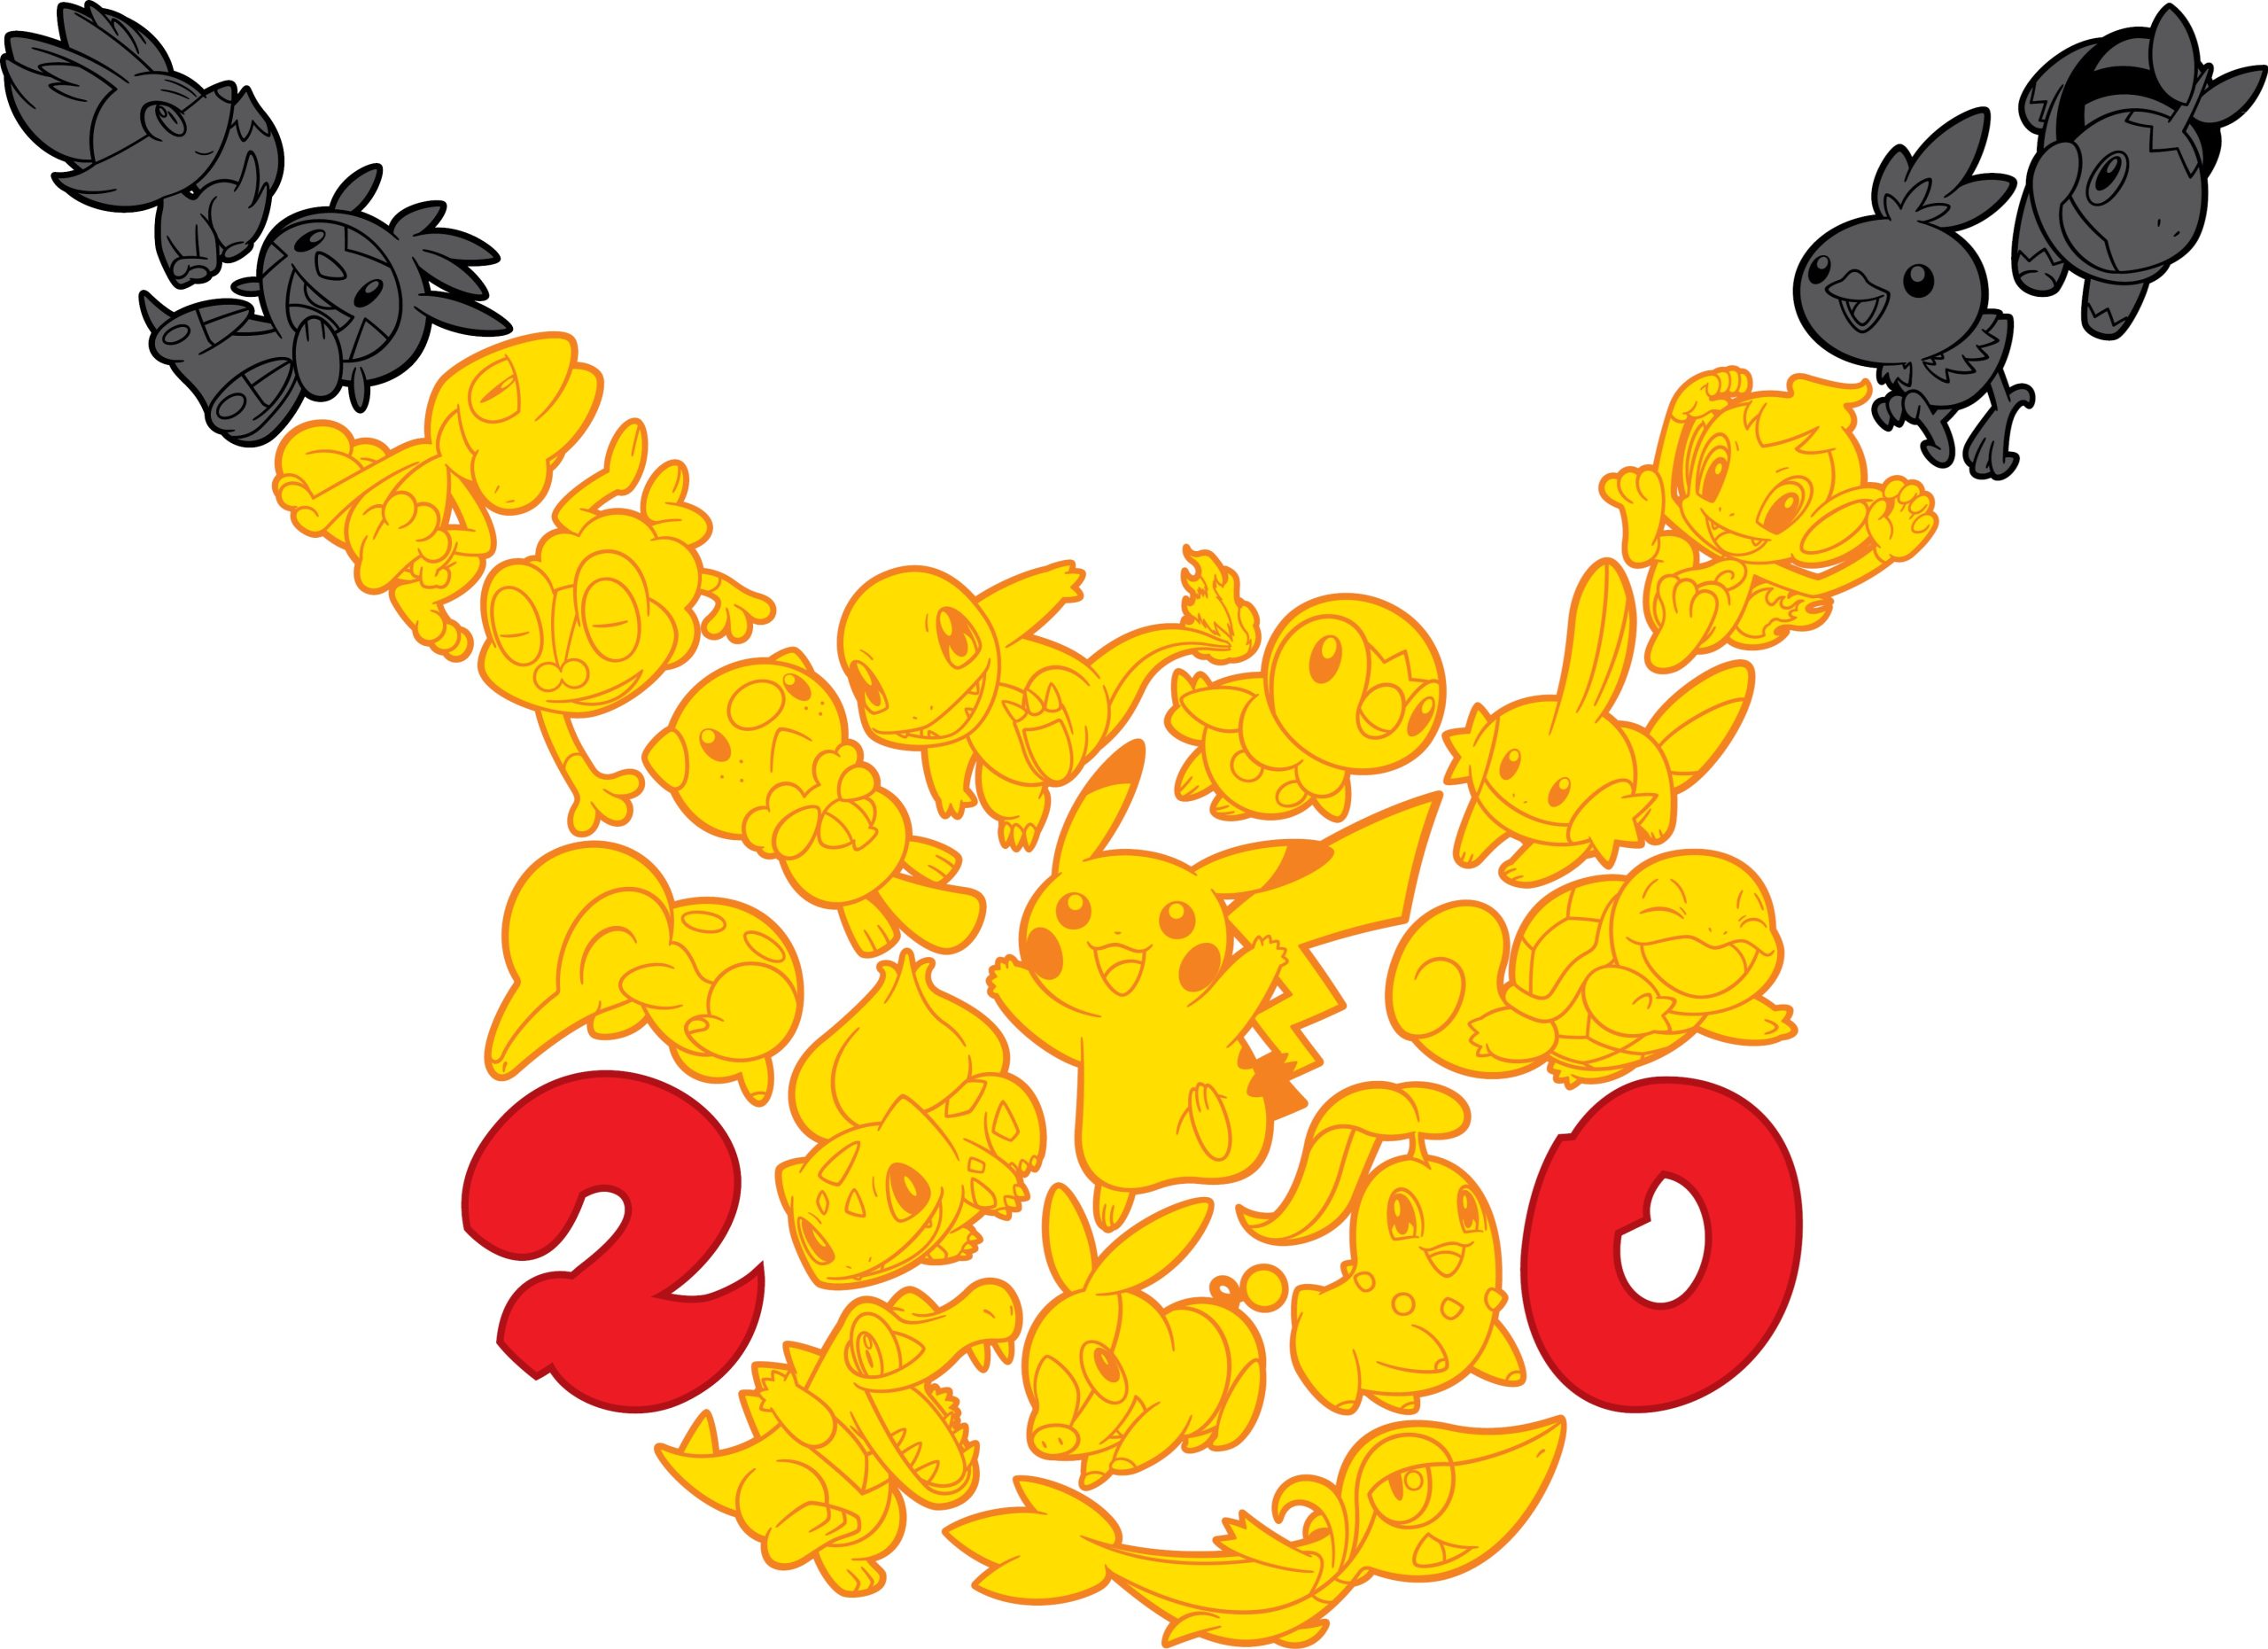 Pokémon’s 20th Anniversary Celebration starts with Mew